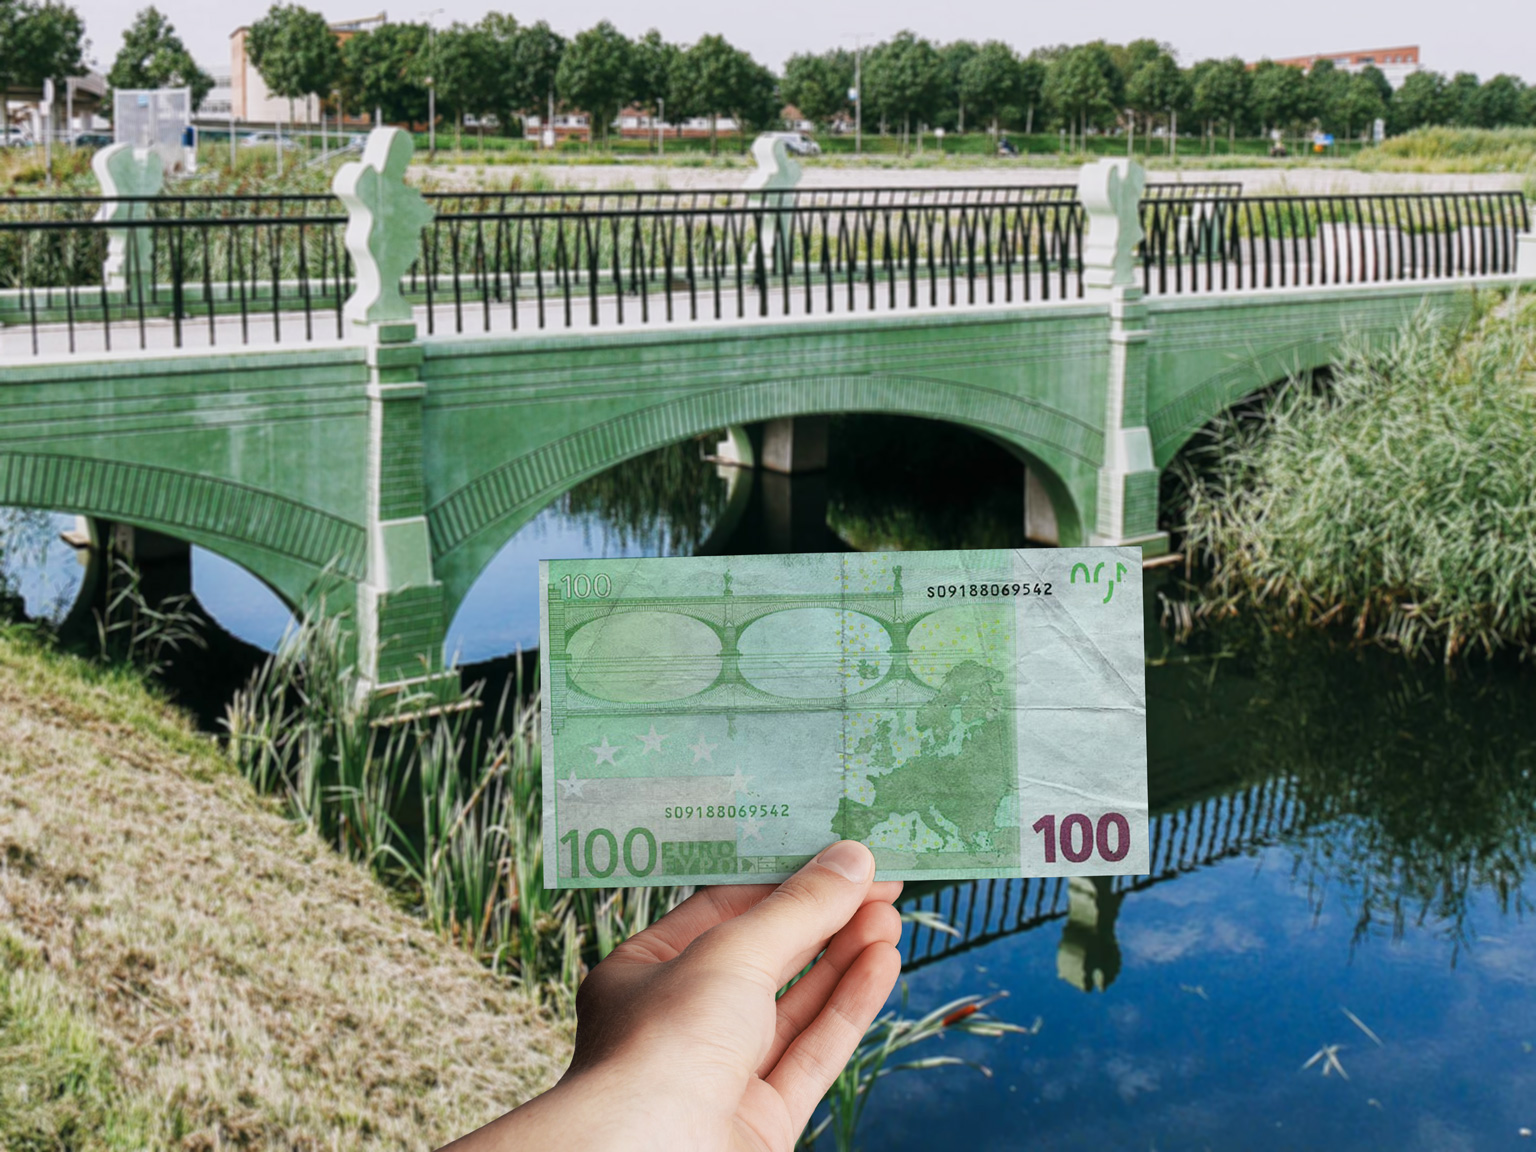 На какой купюре изображен мост. Мост на купюре. 100 Евро мост. Евро банкноты мосты. Мосты изображенные на банкнотах евро.